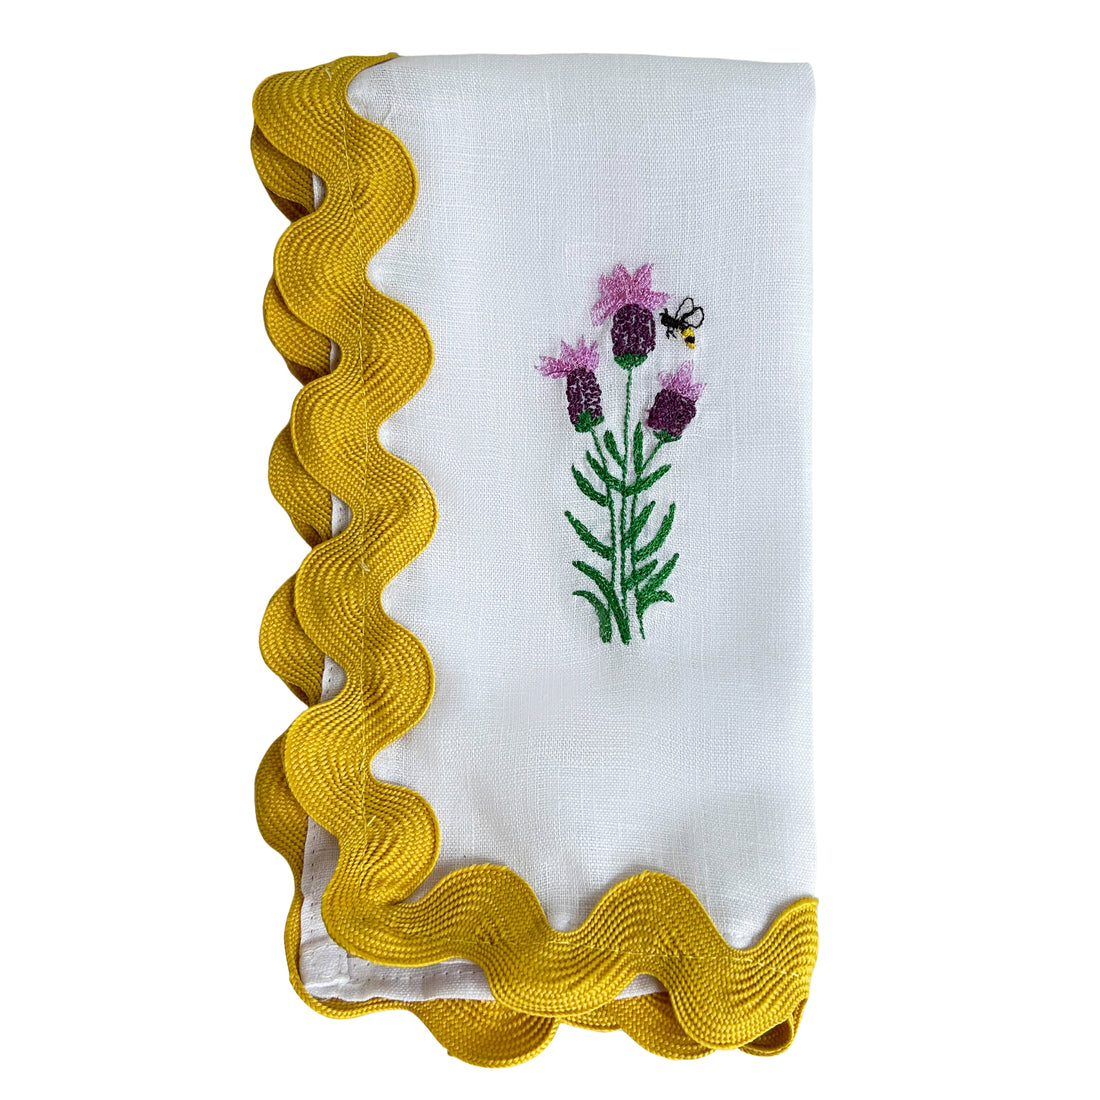 Embroidered Linen Wild Flowers Napkin | Single napkins